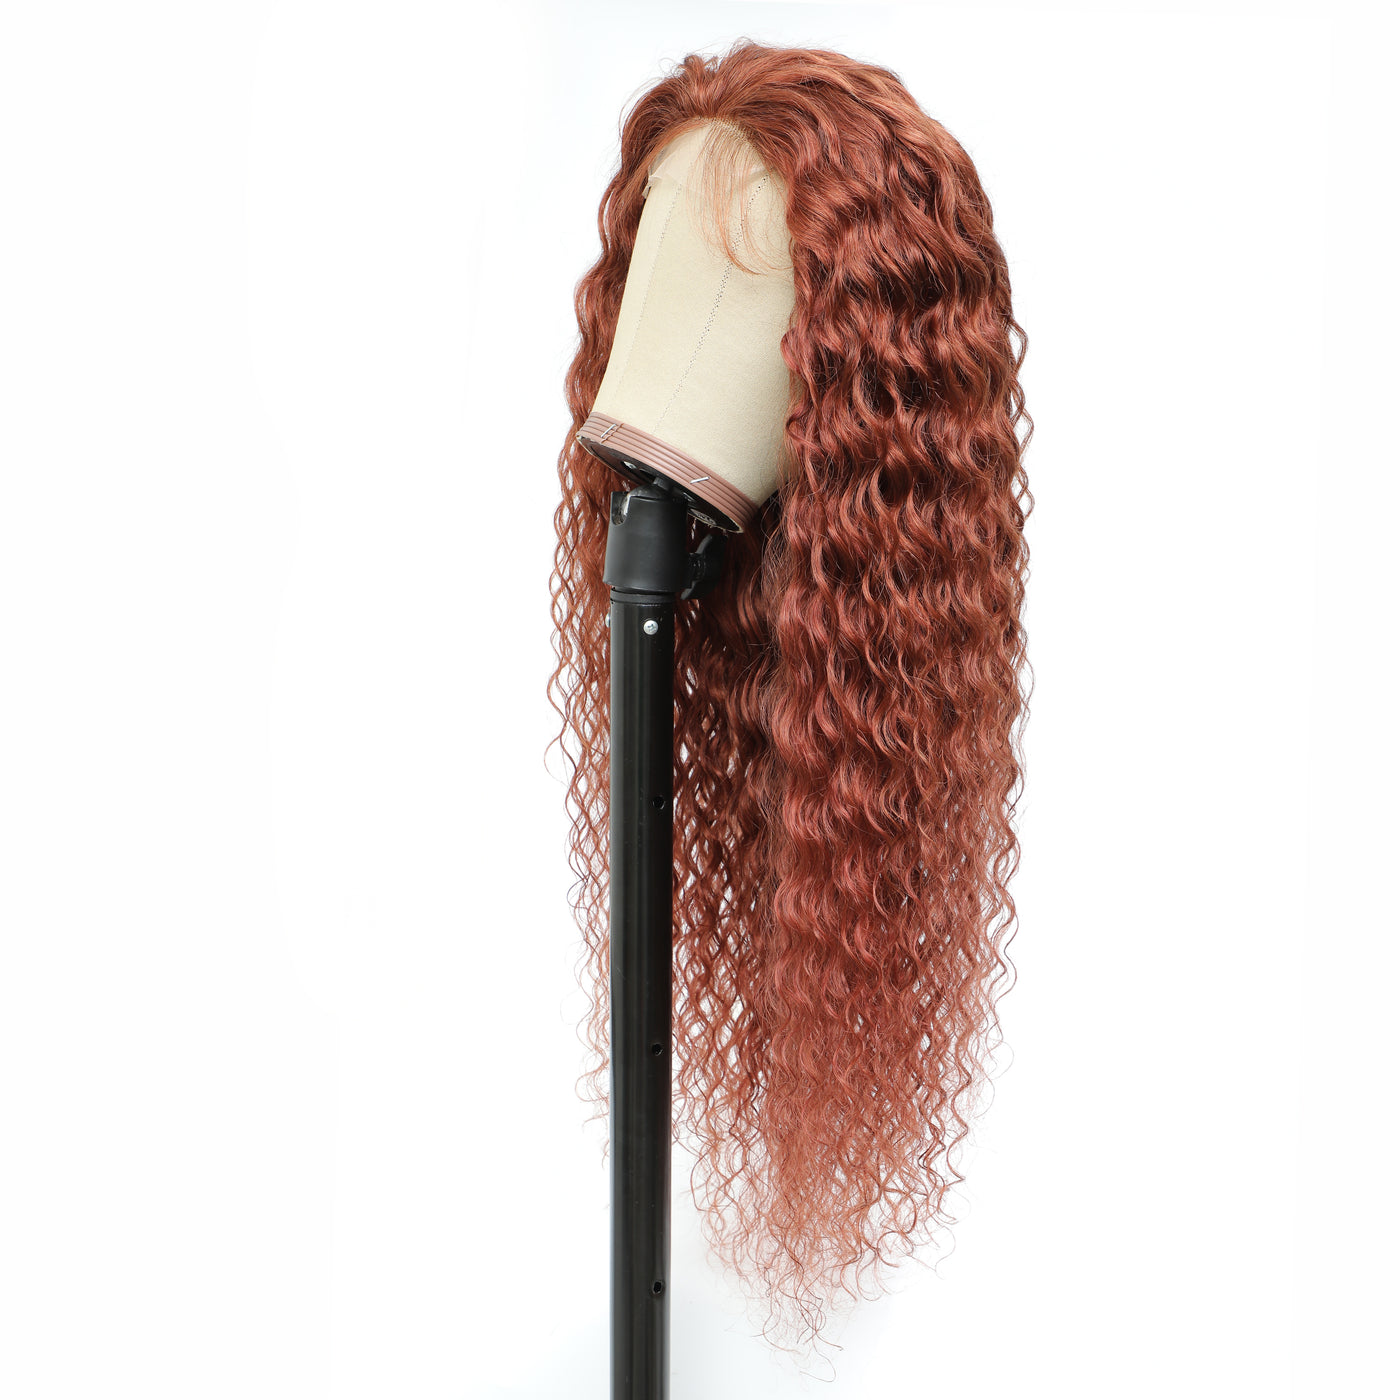 Auburn Brown Deep Wave Human Hair 4x4 Lace Closure Wig